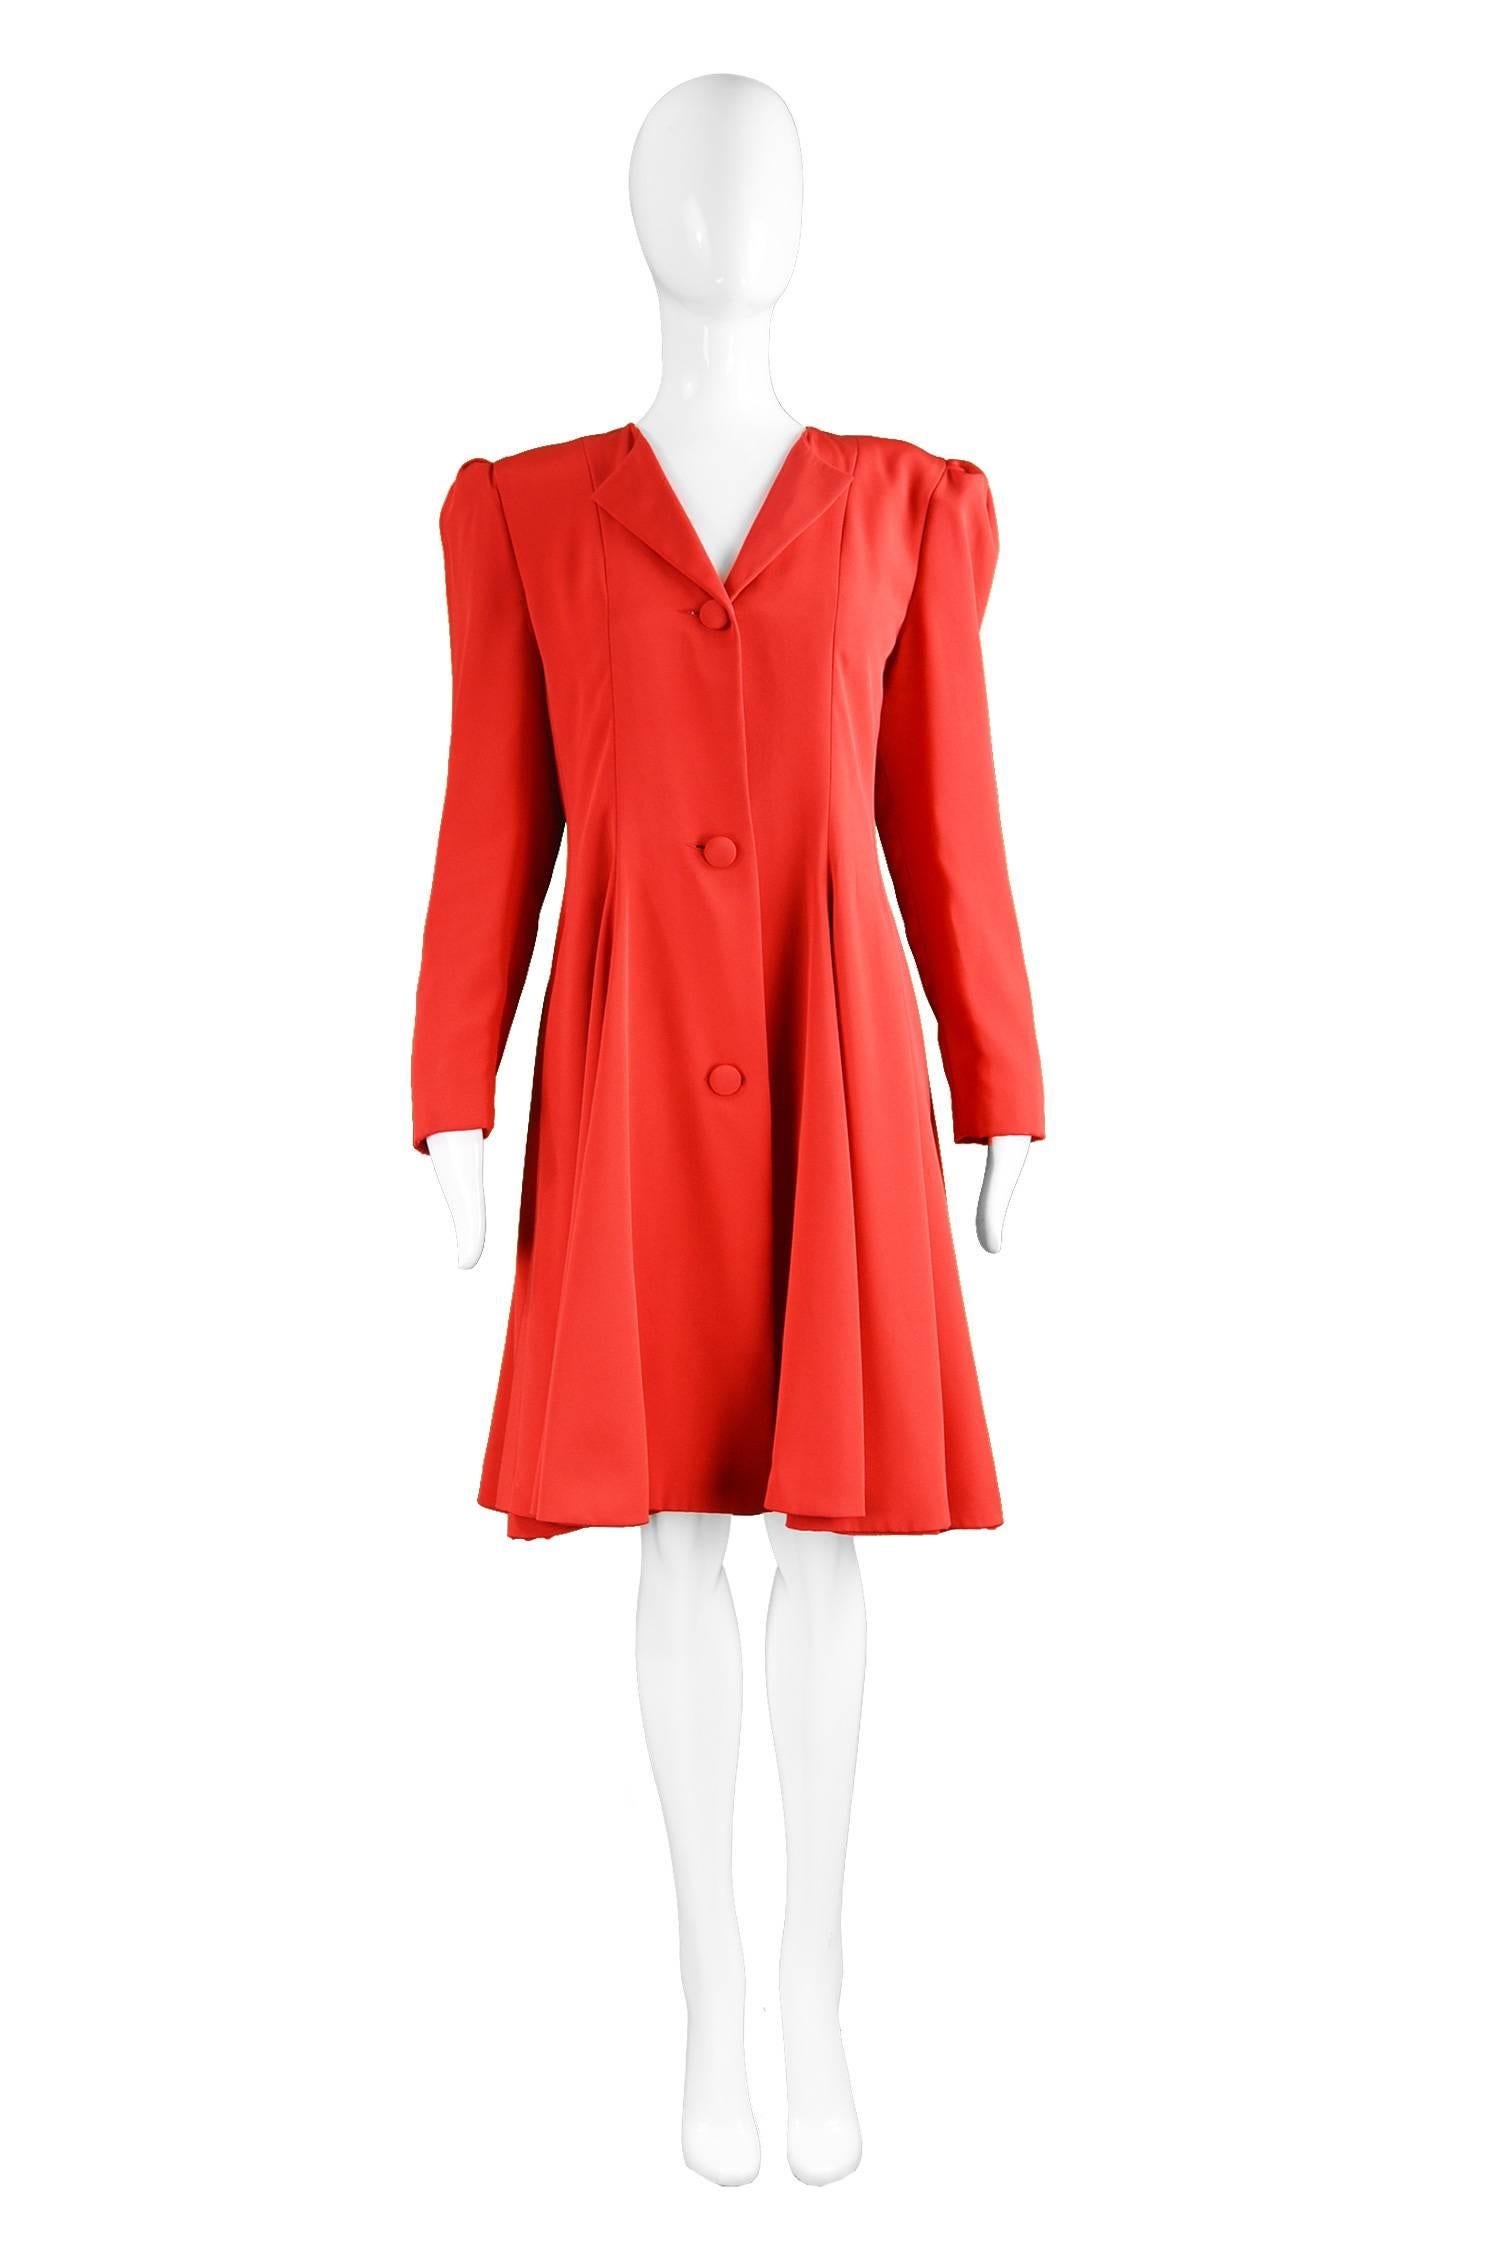 Carolina Herrera For Neiman Marcus Red Silk Full Skirt Evening Coat, 1980s

Estimated Size: UK 12-14 / US 8-10/ EU 40-42. Please check measurements.
Bust - 38” / 96cm
Waist - 32” / 81cm
Hips - Free
Length (Shoulder to Hem) - 39” / 99cm
Sleeve Pit to